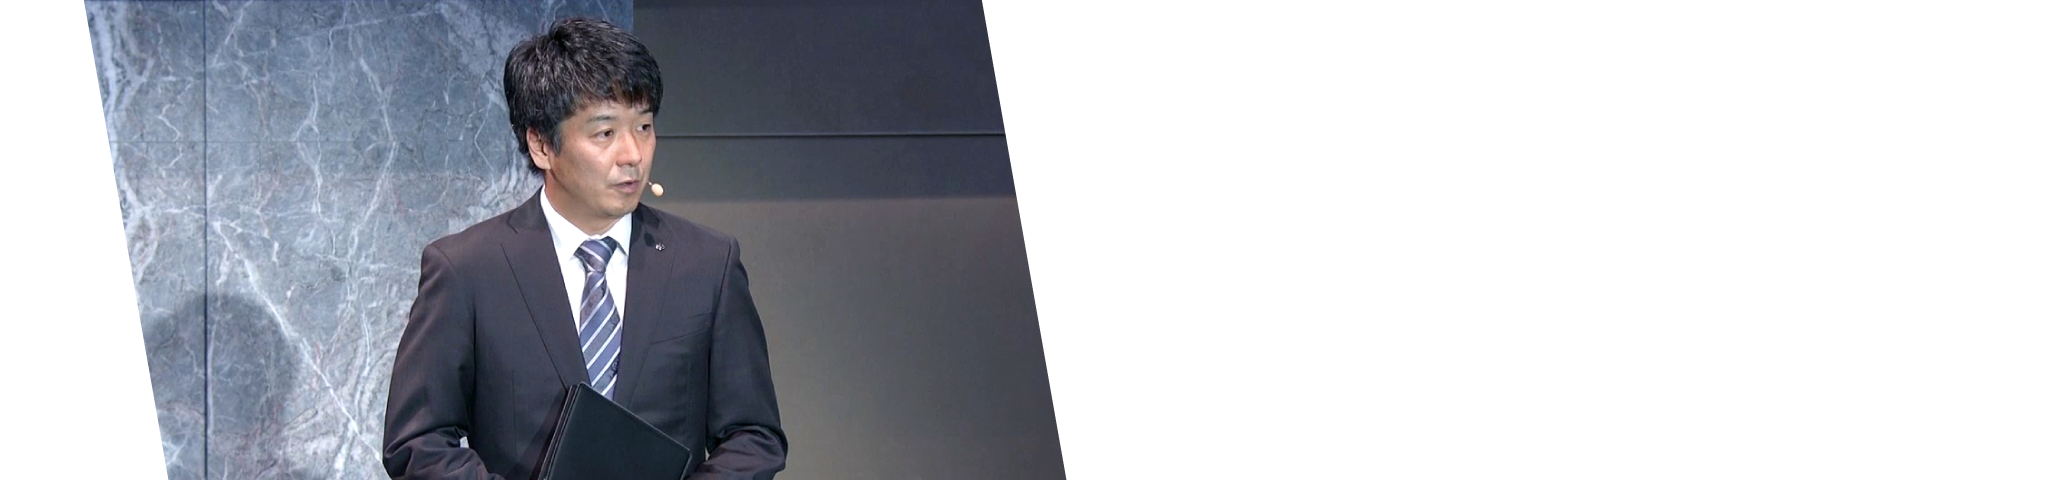 Growth Strategy Aiming to Become an IP Company with a Global Presence President & COO Tetsuya Shigematsu